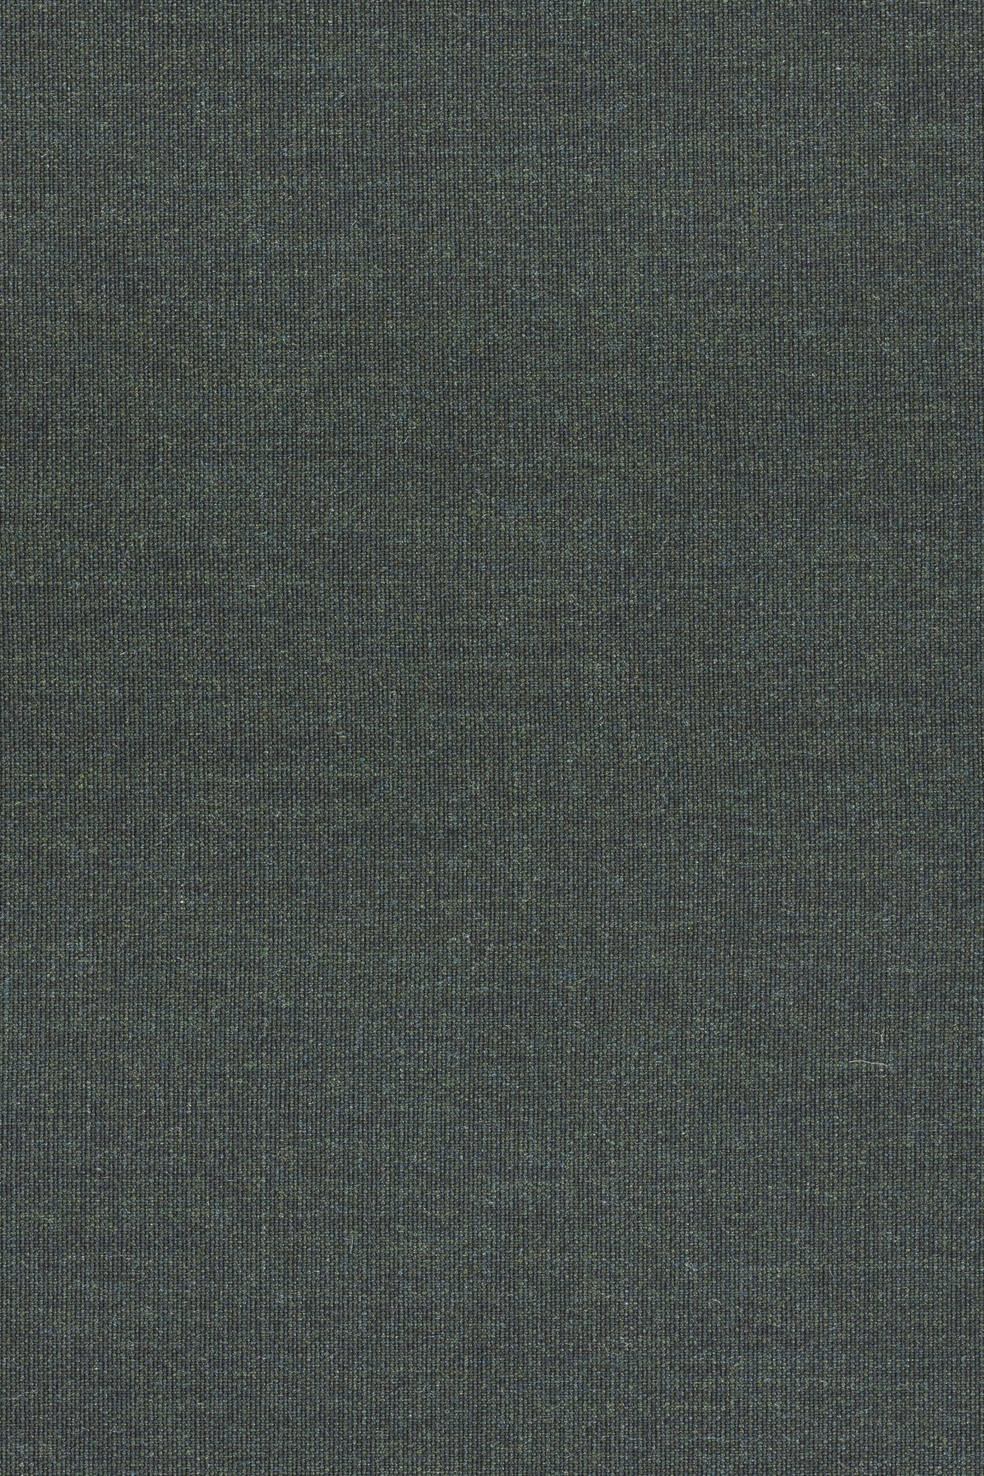 Fabric sample Canvas 2 996 grey